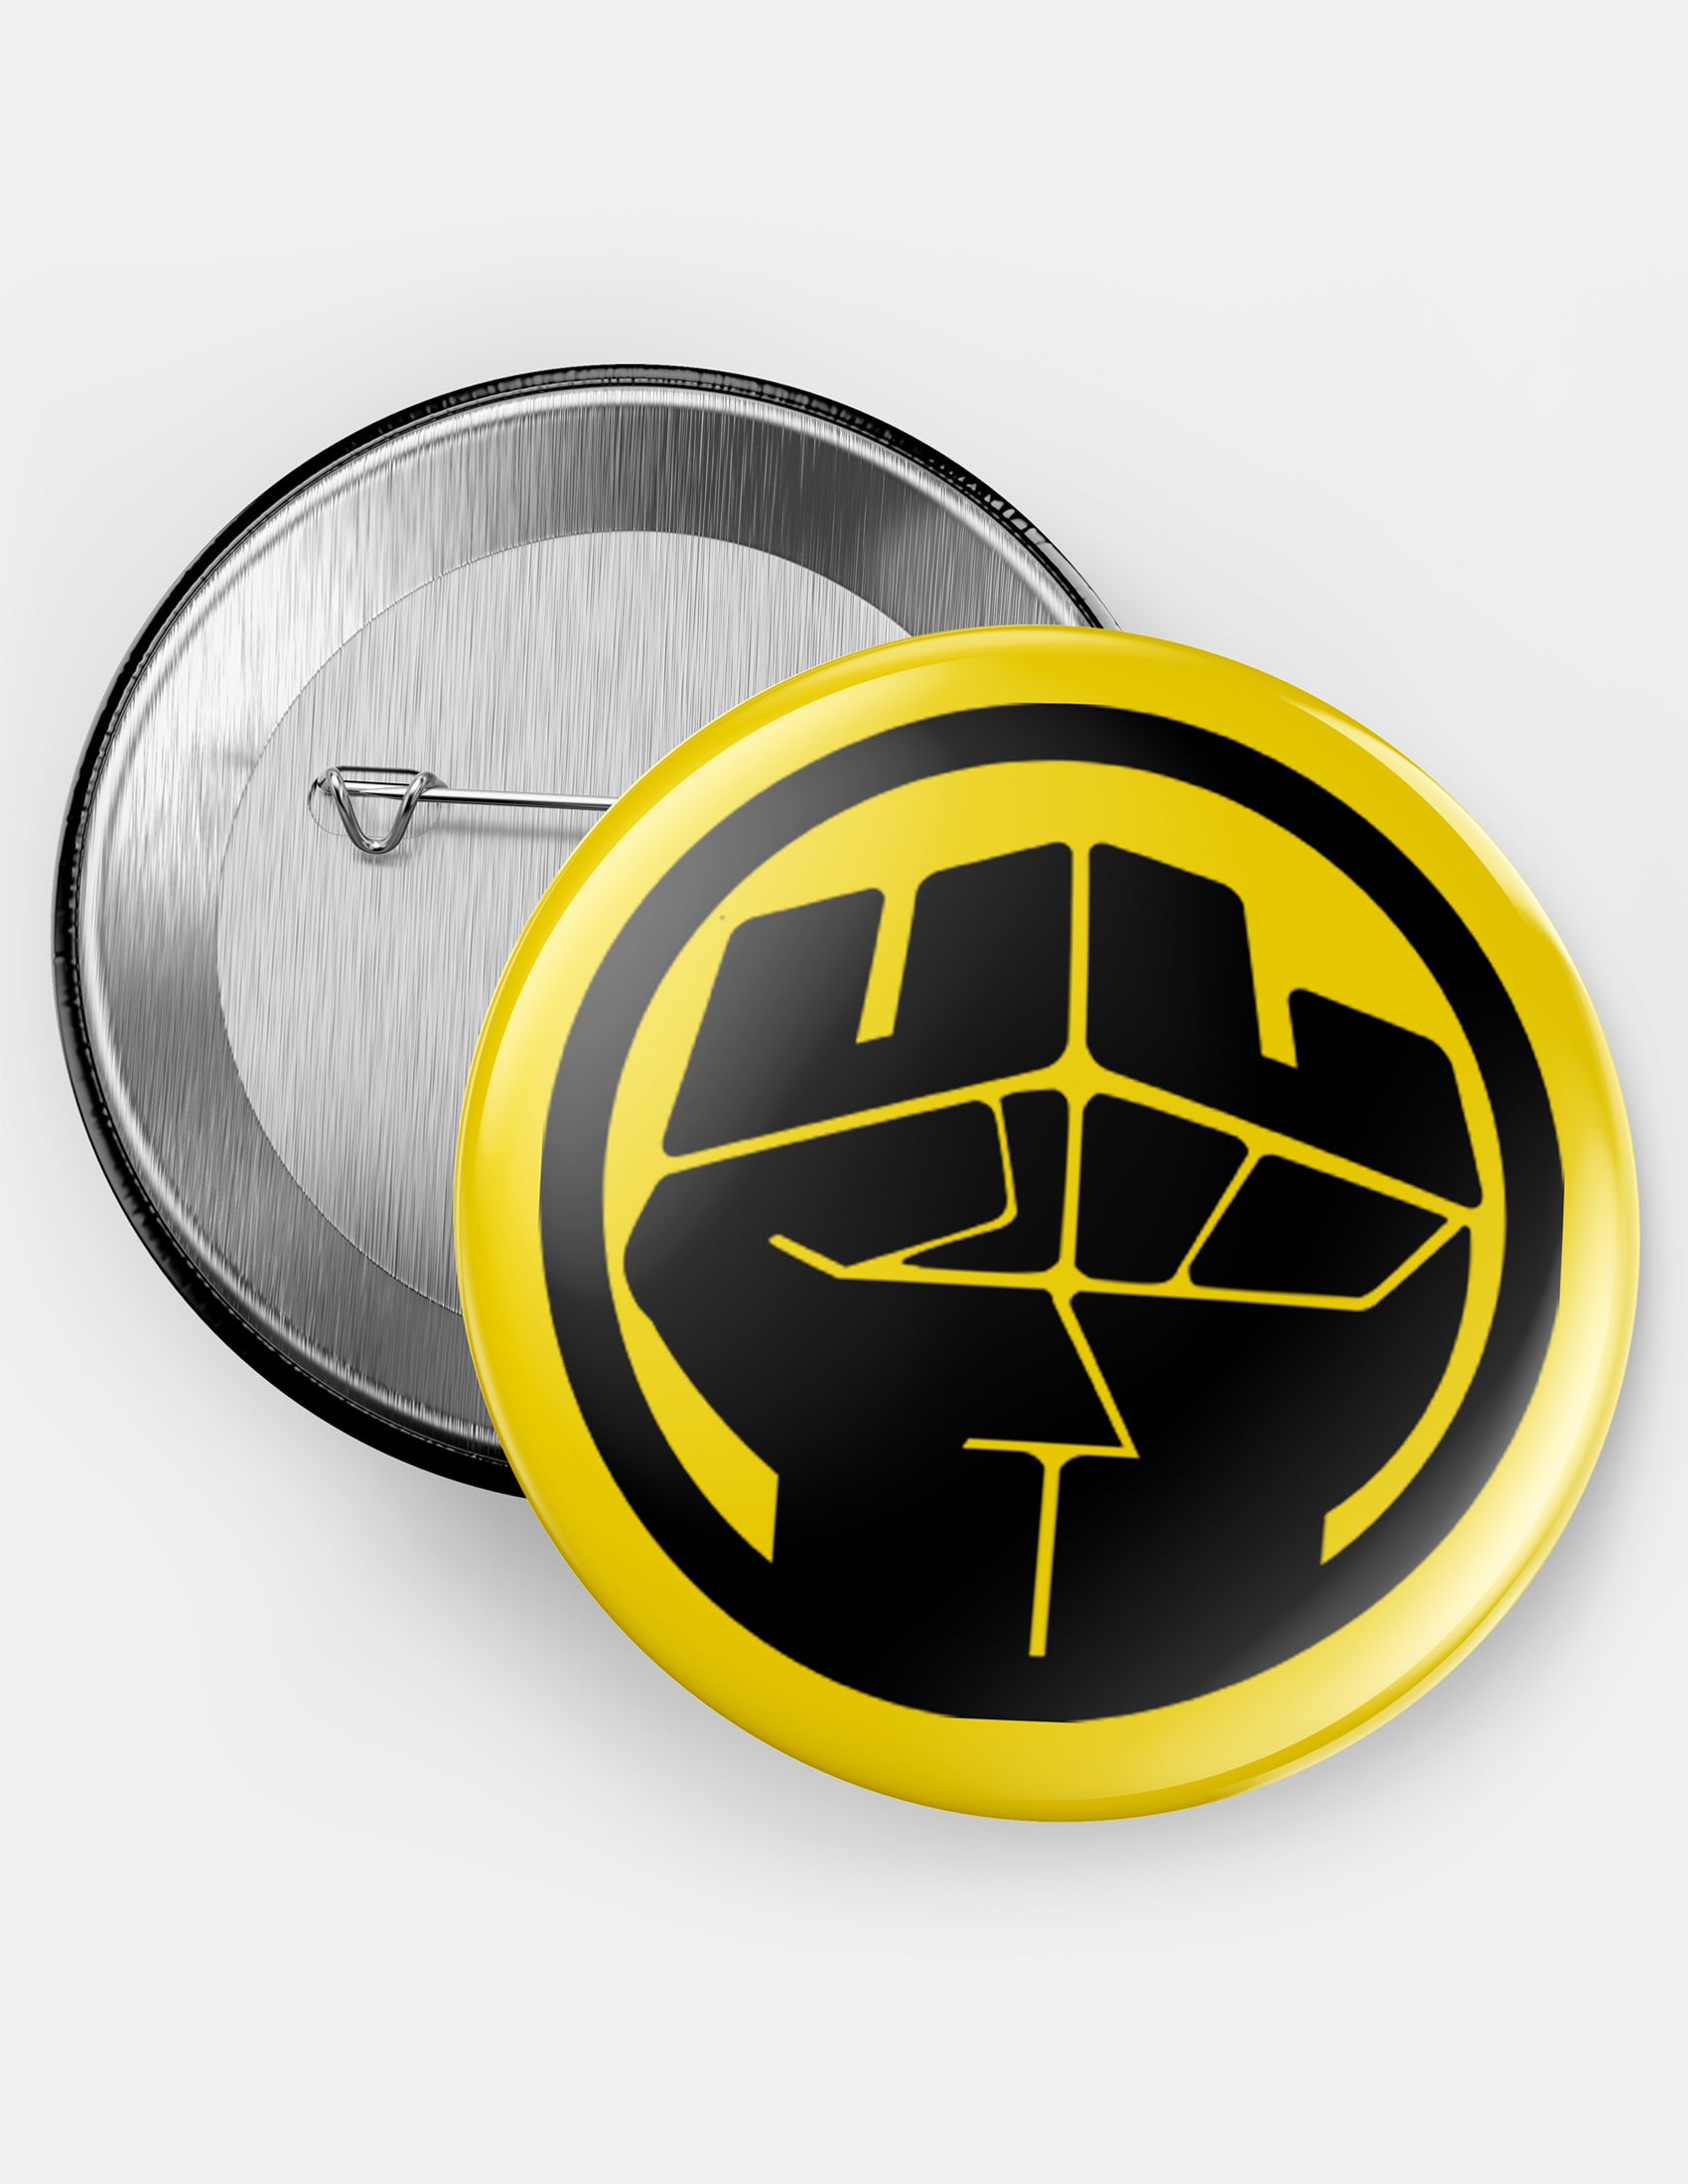 The Urban Legend - Pin button (Fist logo)